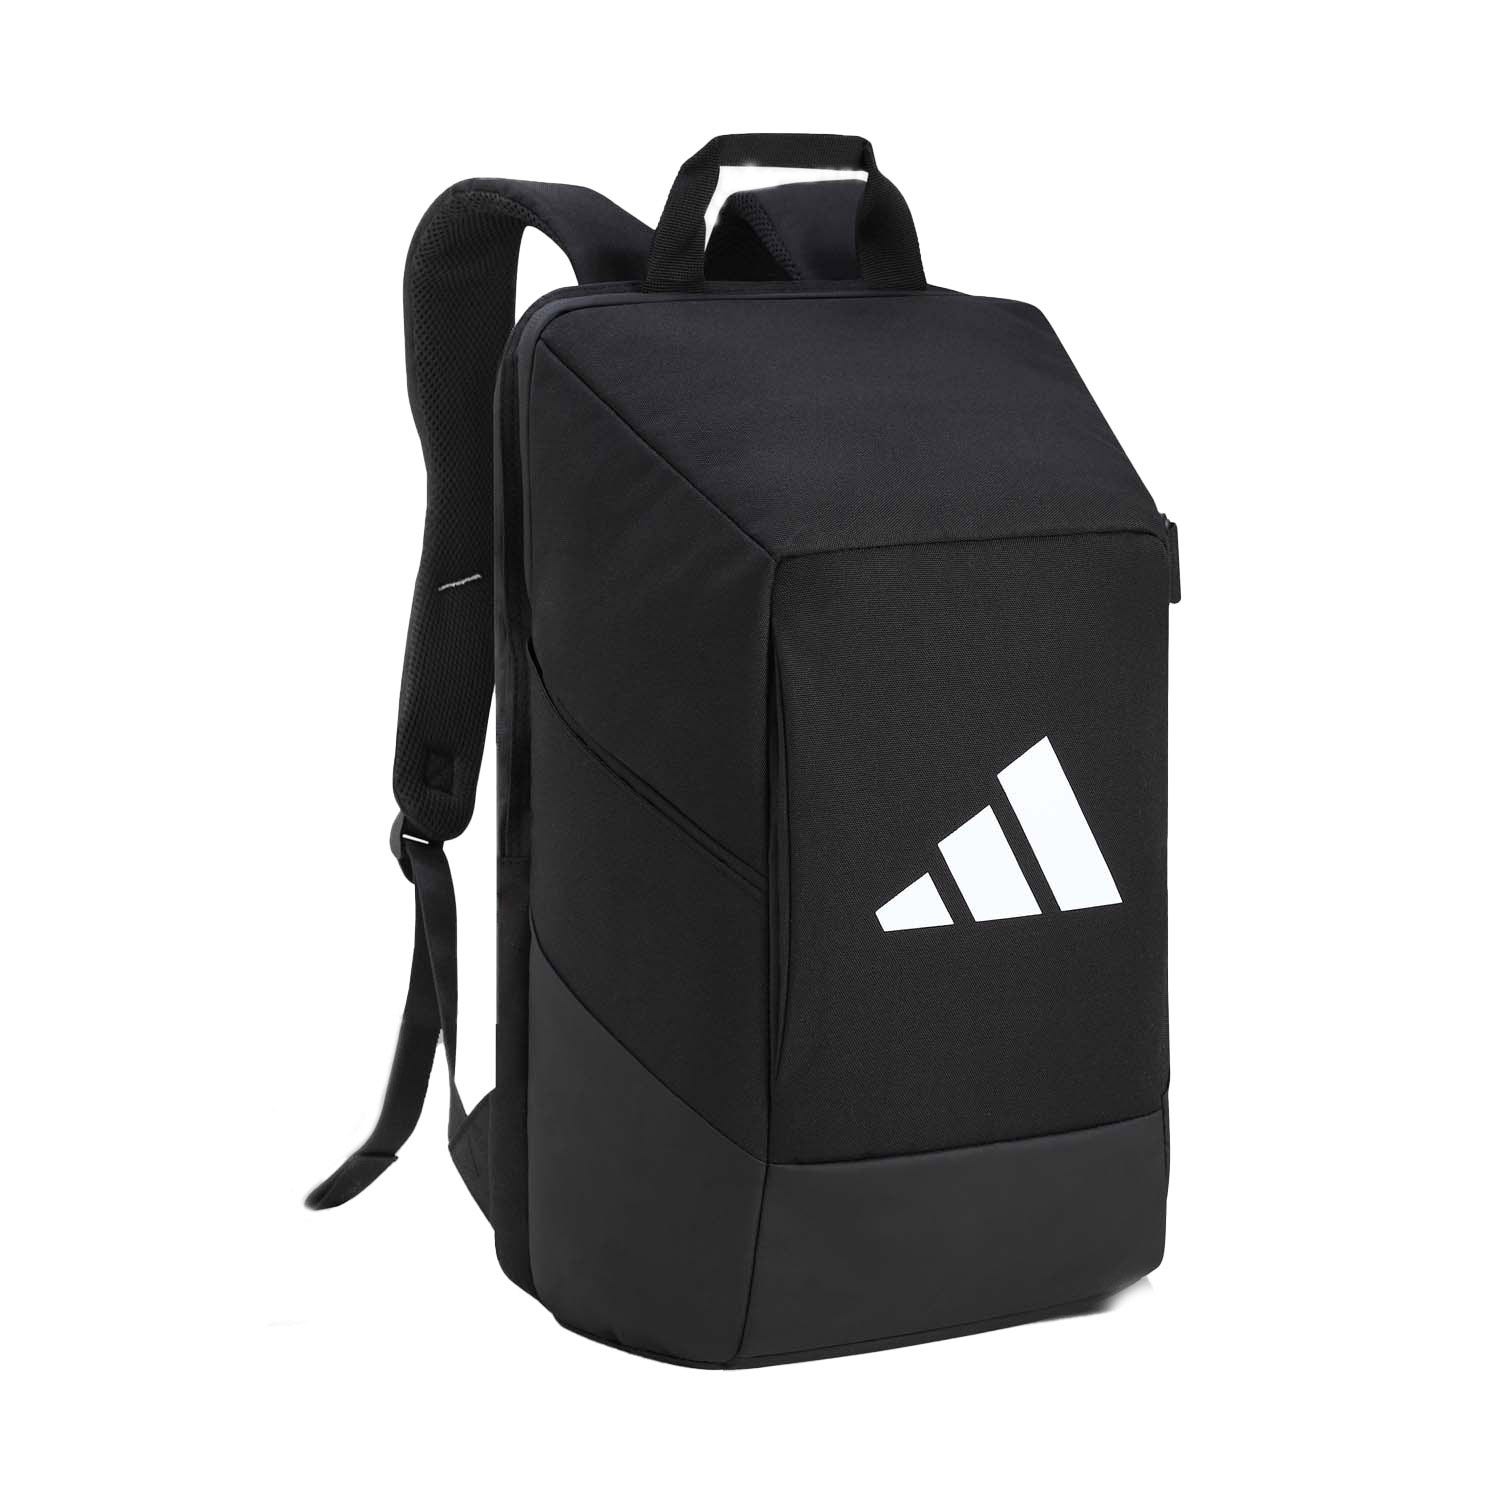 Adidas Vs 6 Backpack